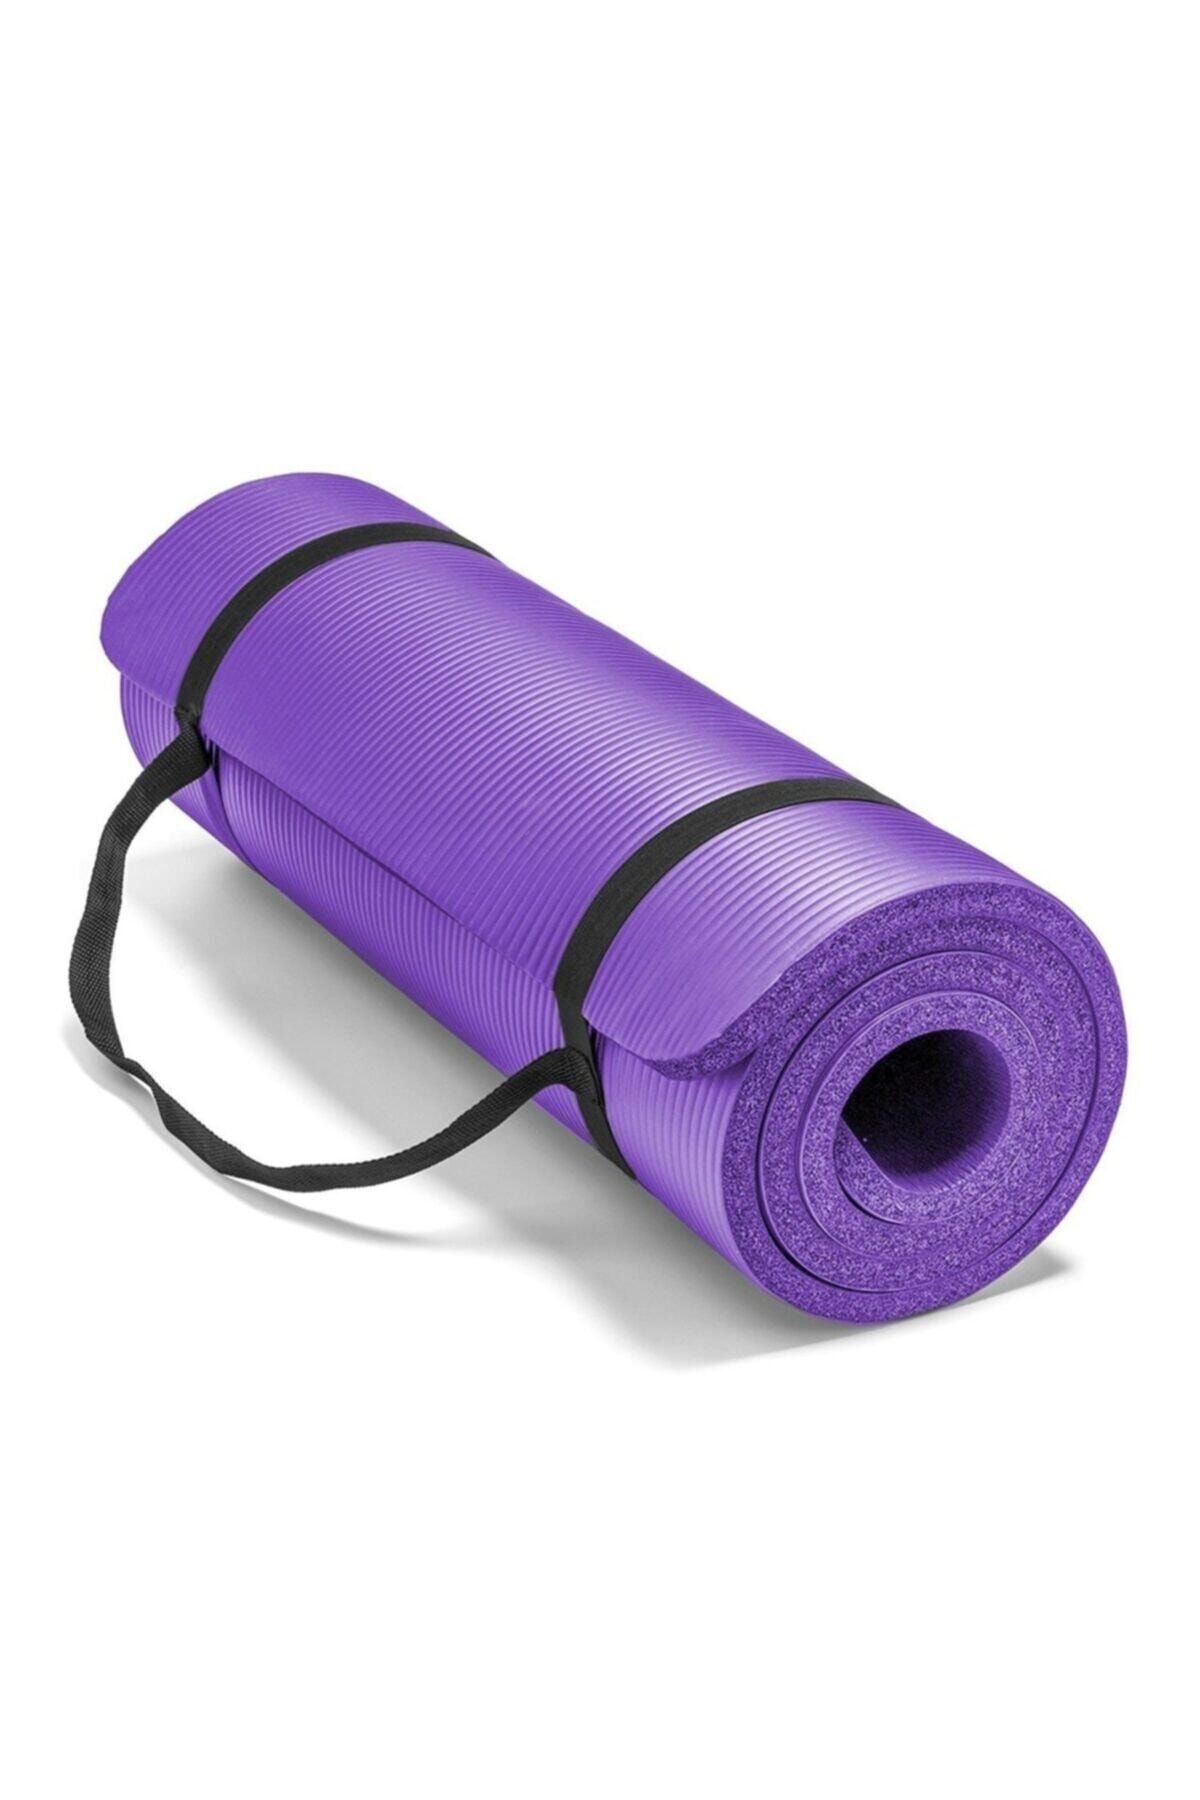 Povit Lks 19 (1cm) Mor Renk Egzersiz Yoga Ve Pilates Minderi